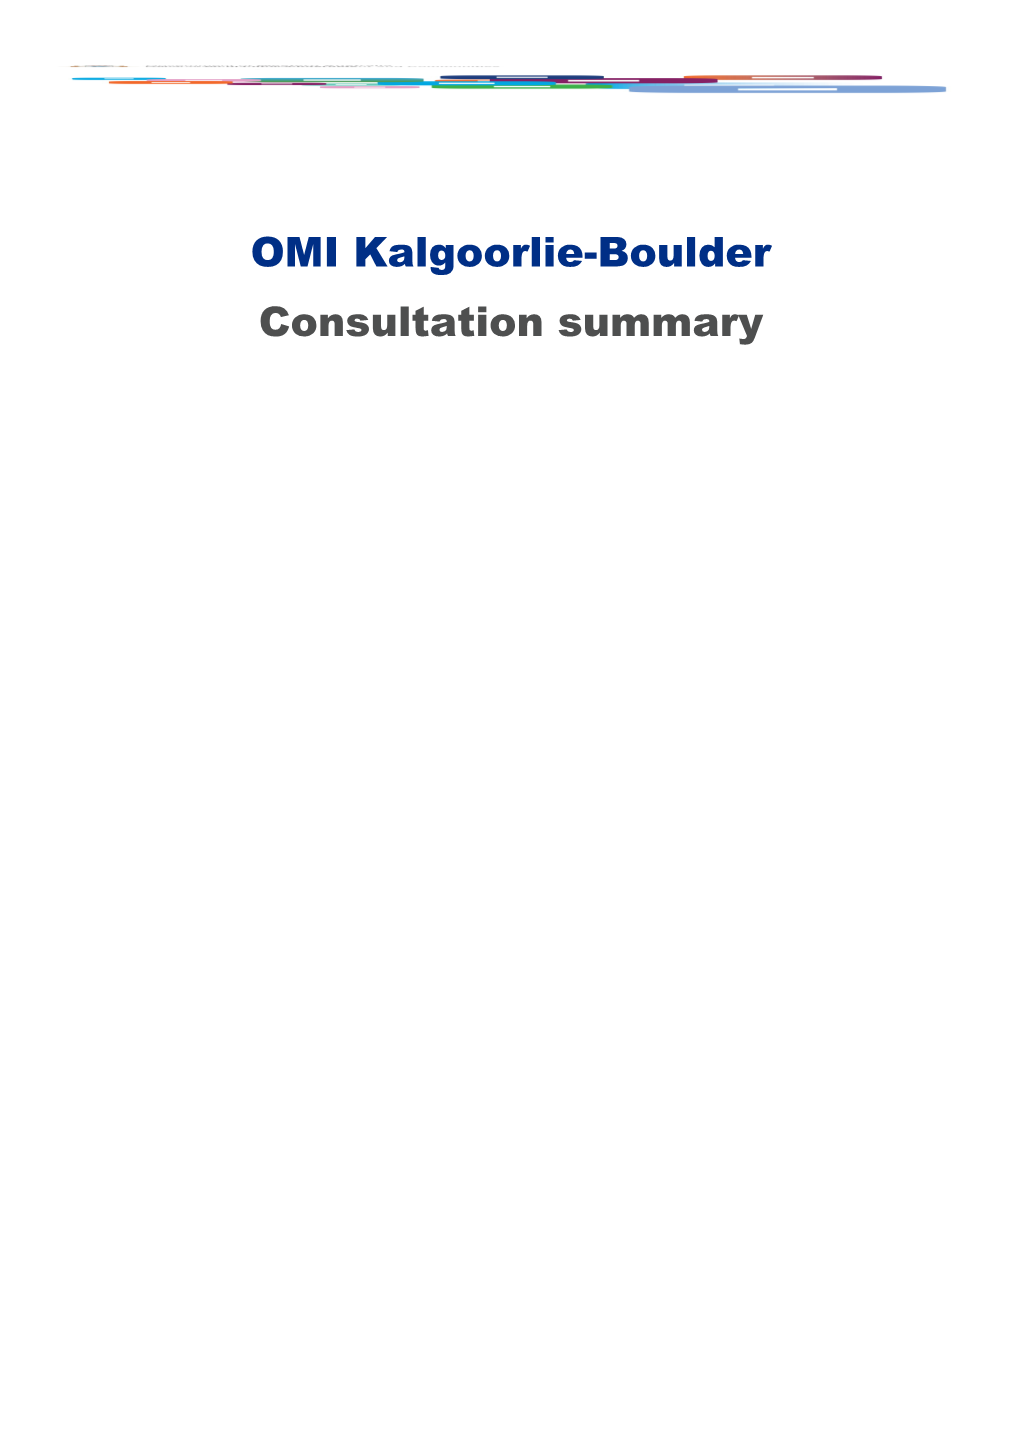 Kalgoorlie-Boulder Consultation Summary